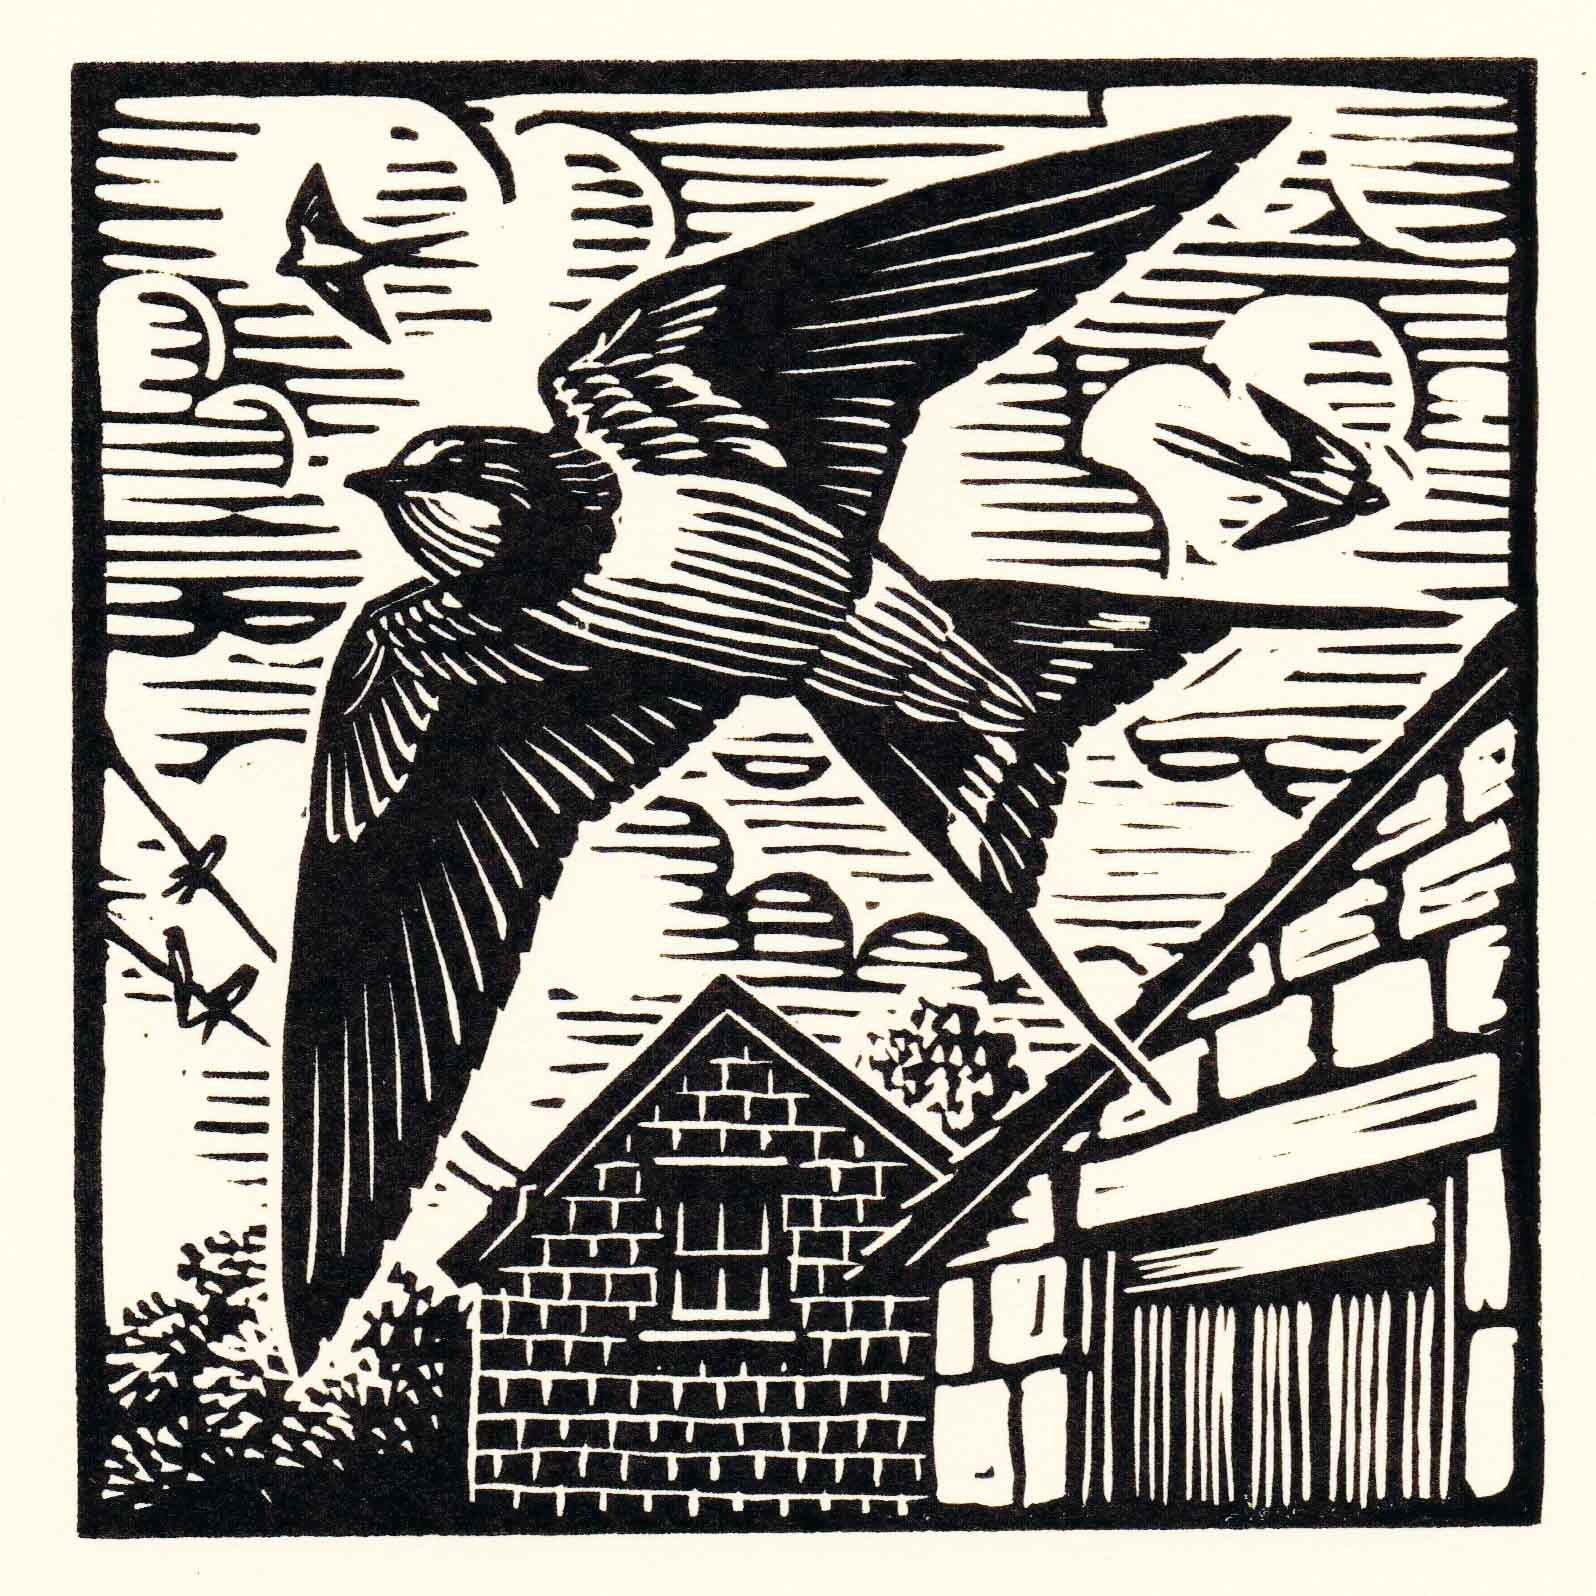 Art Greeting Card by Richard Allen, Linocut, Swallows in the sky